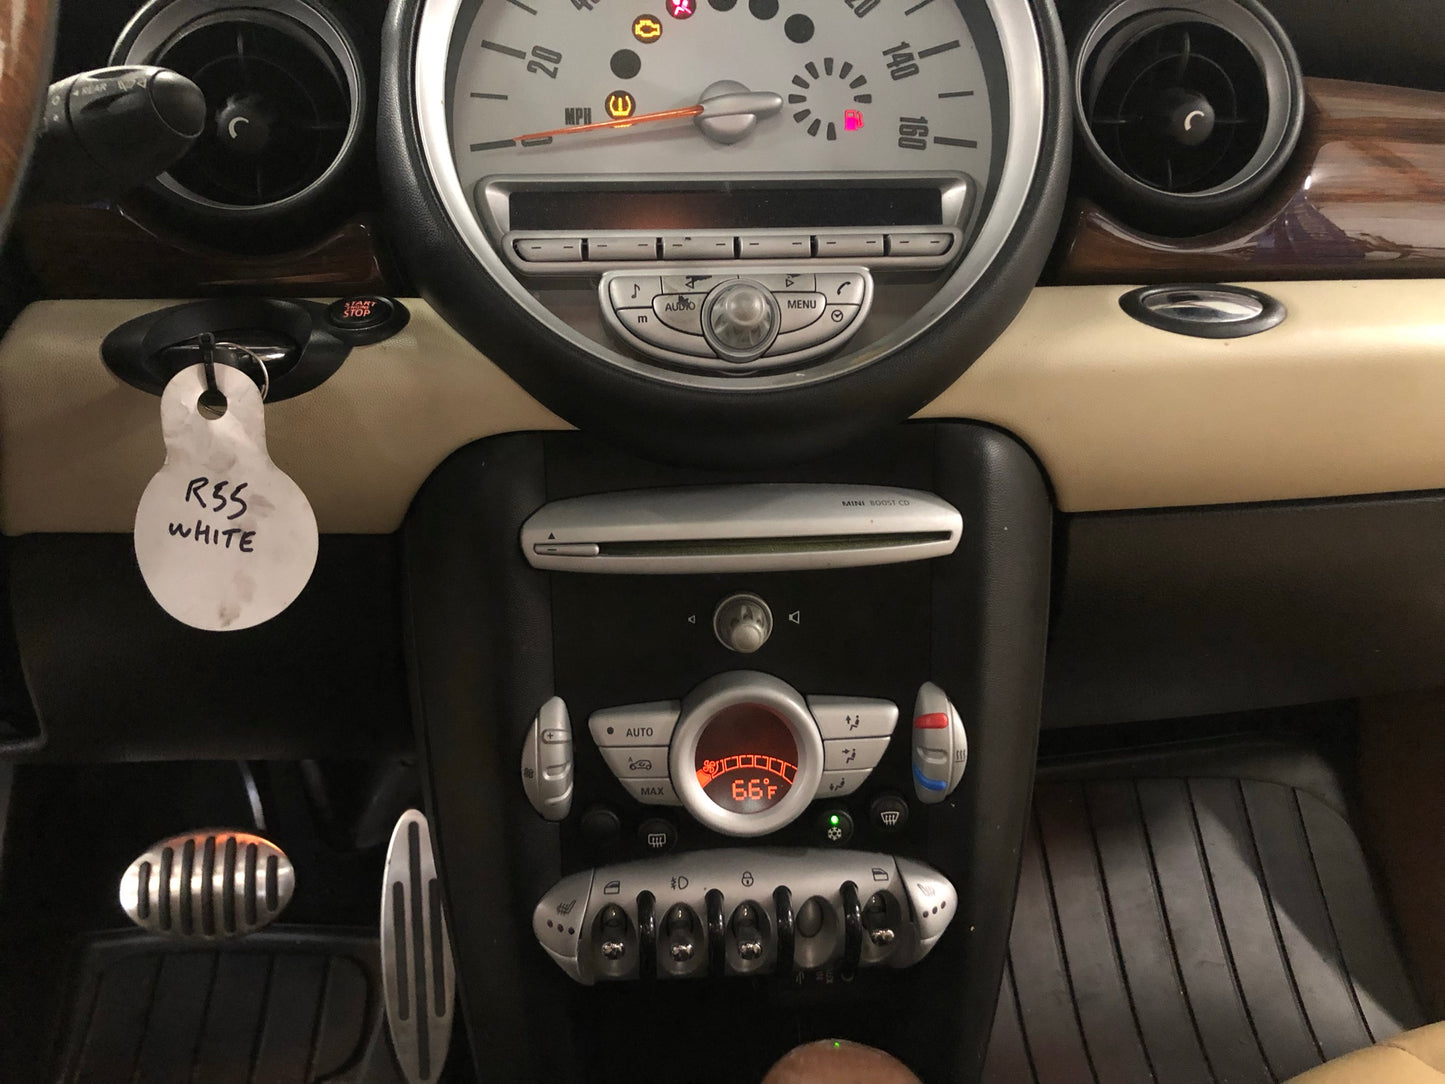 2009 MINI Cooper Clubman S, New Parts Car (November 2021) Stk #267